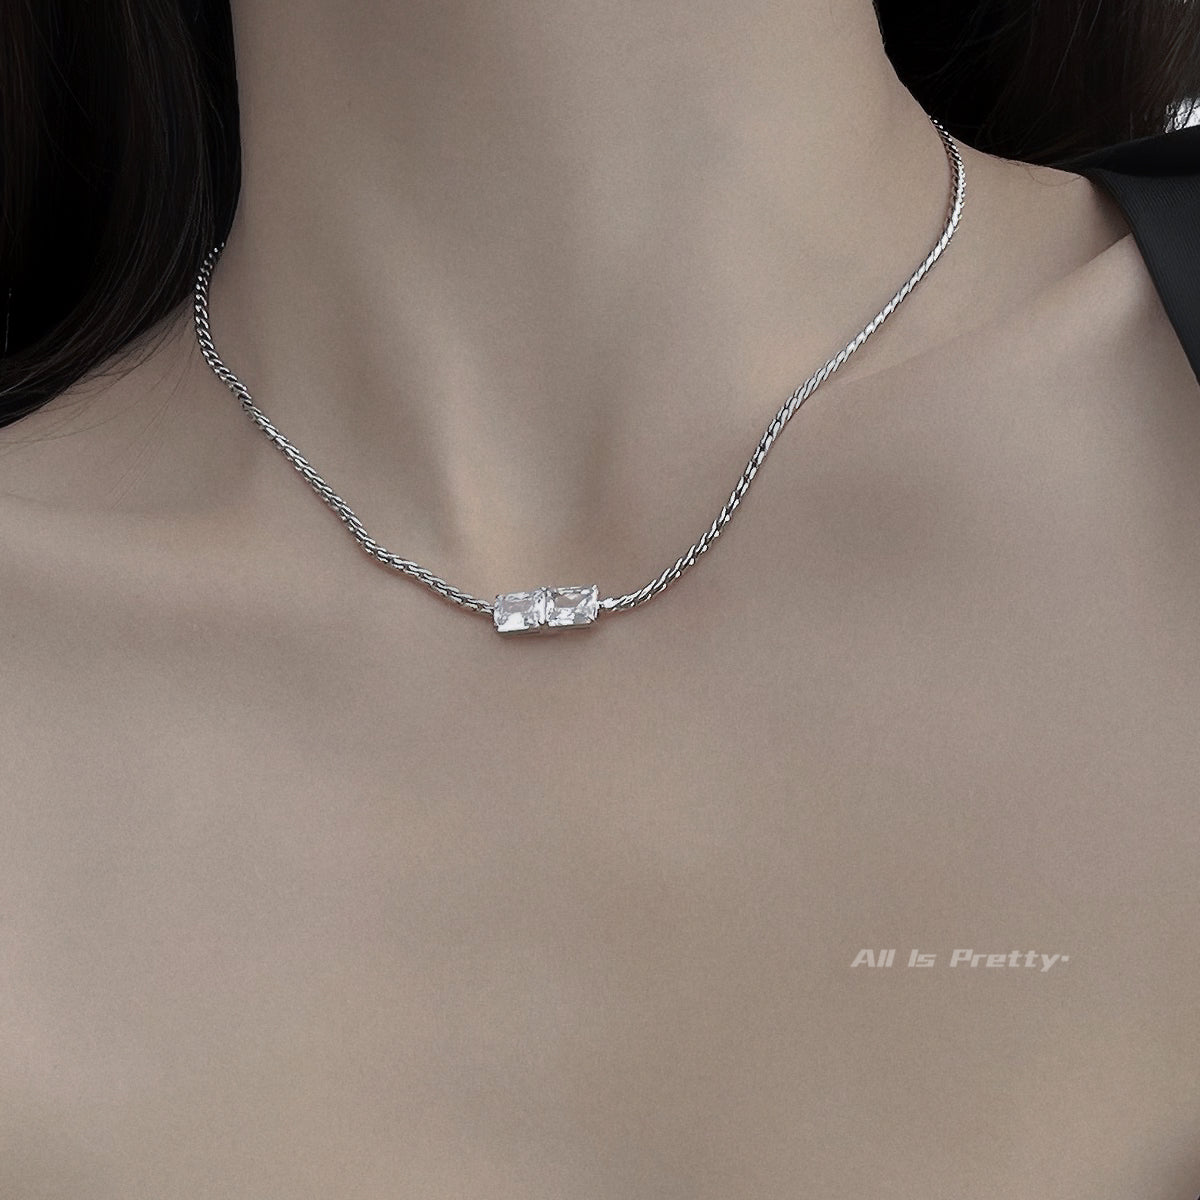 Ice cube pendant choker necklace